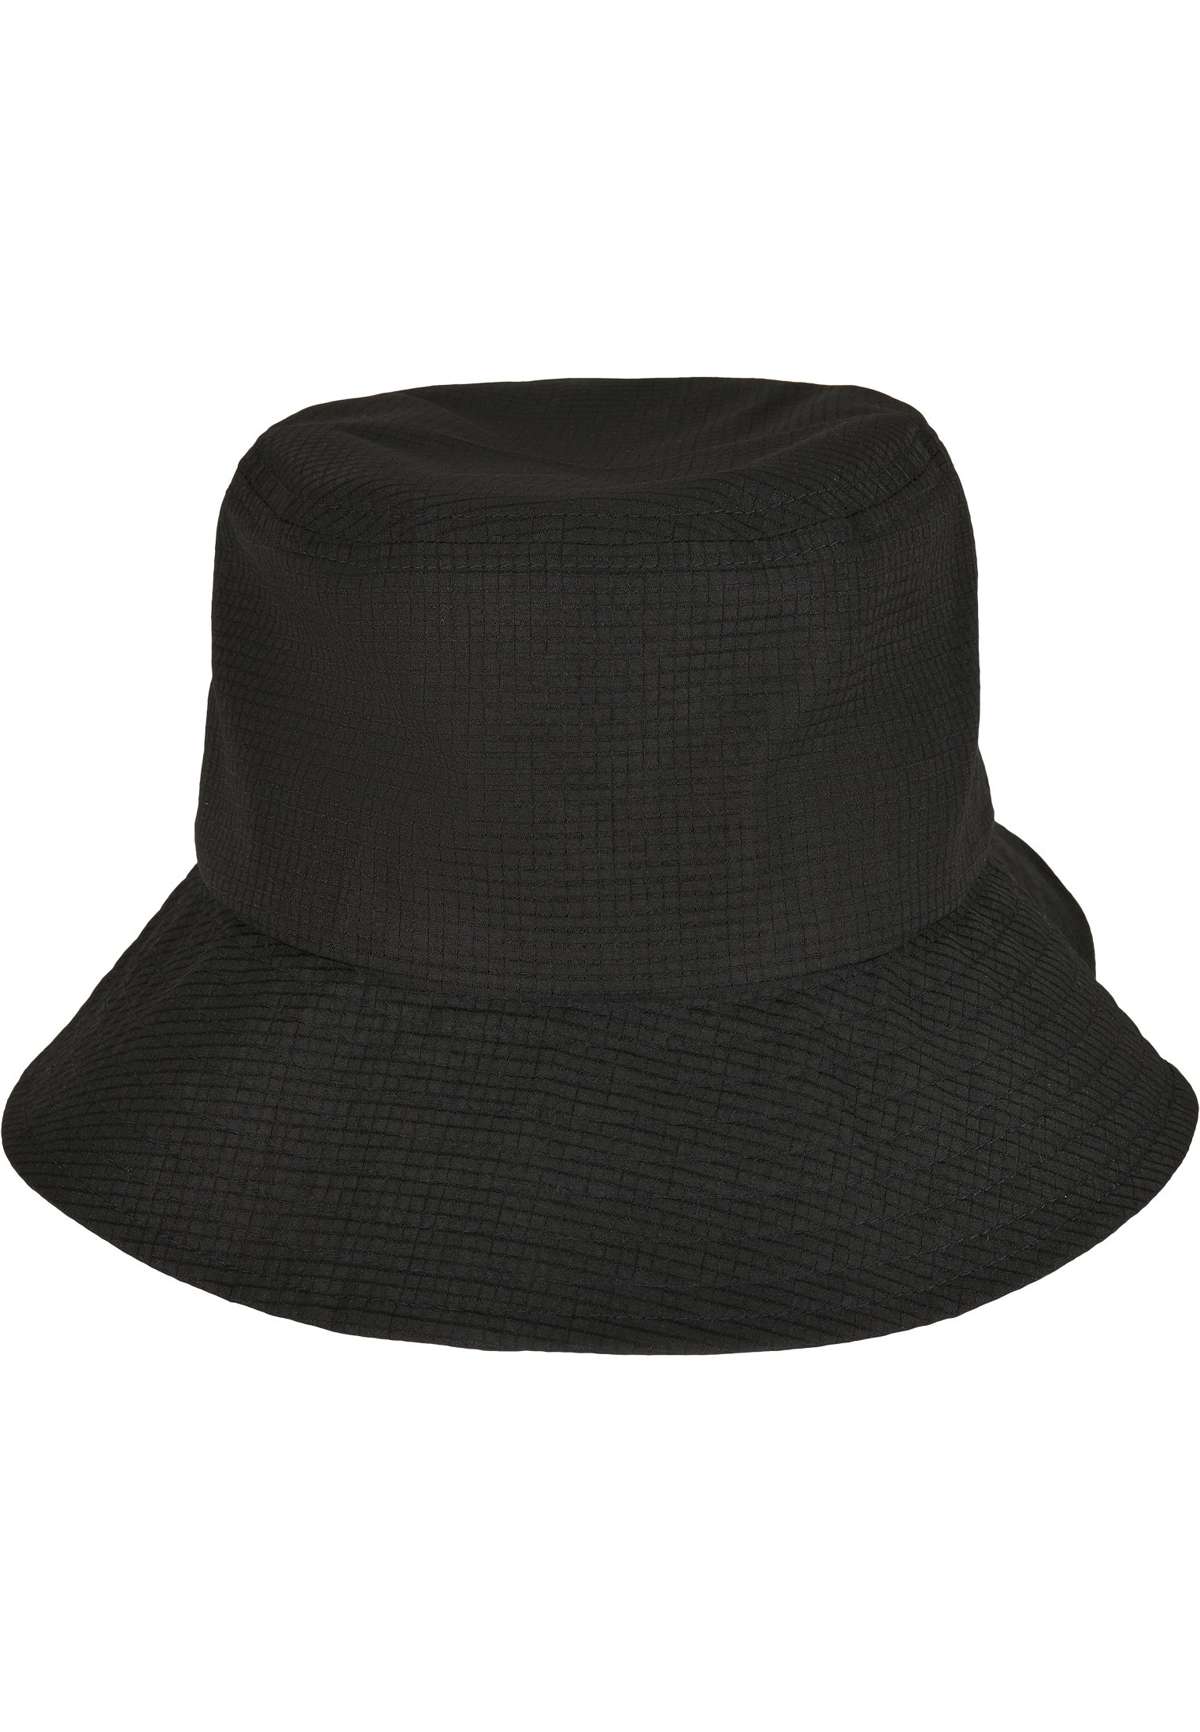 Шляпа ADJUSTABLE BUCKET